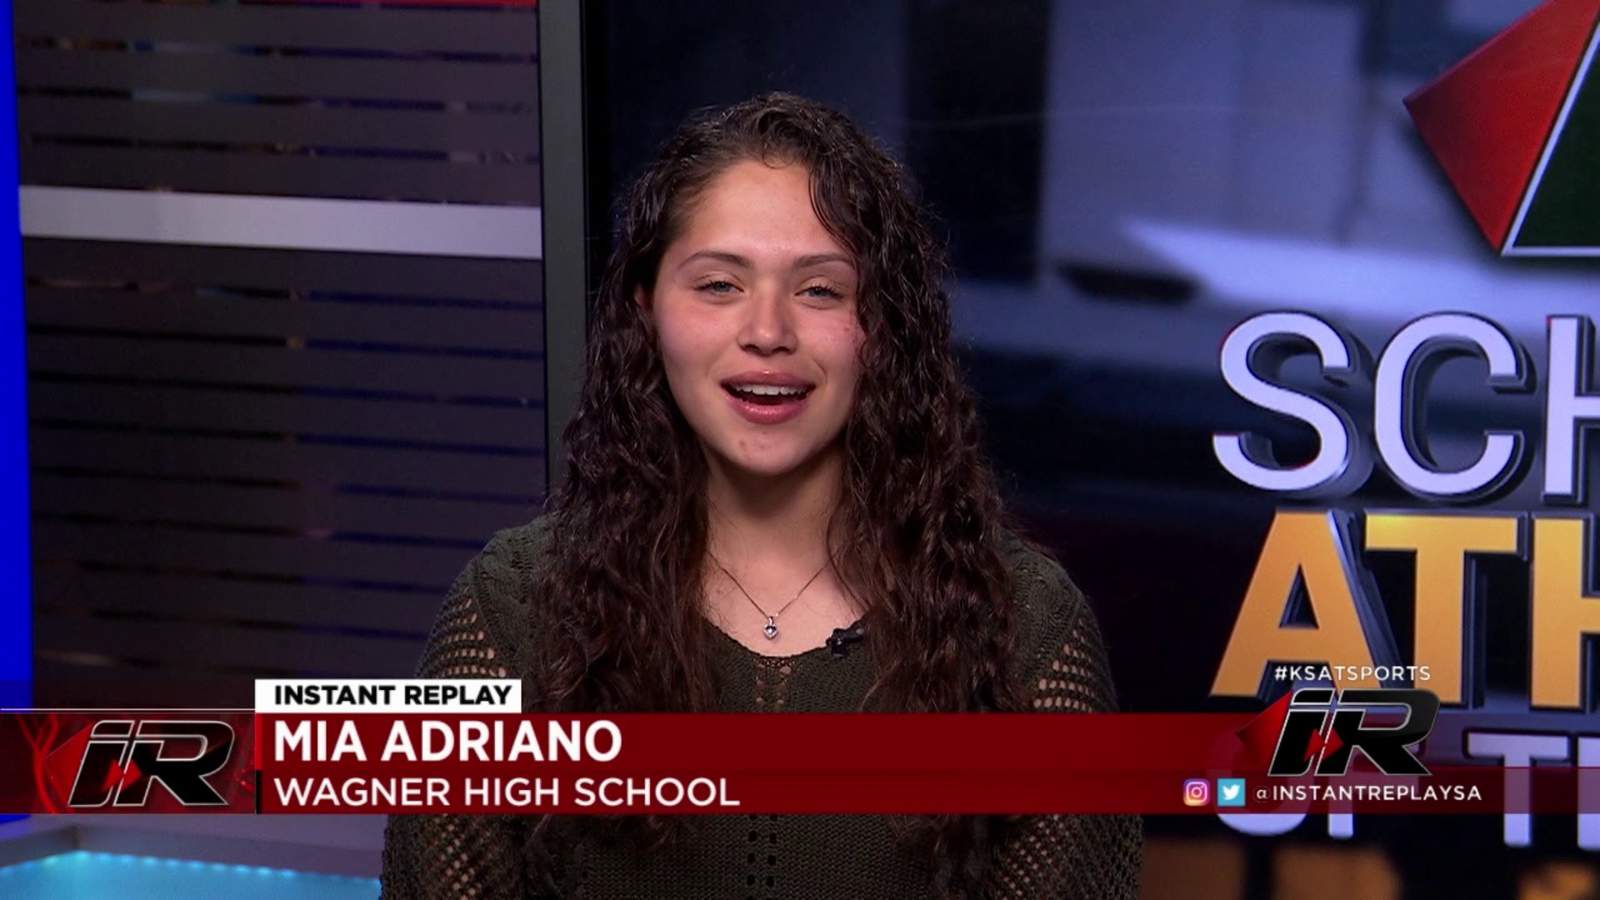 Scholar Athlete: Mia Adriano, Wagner High School